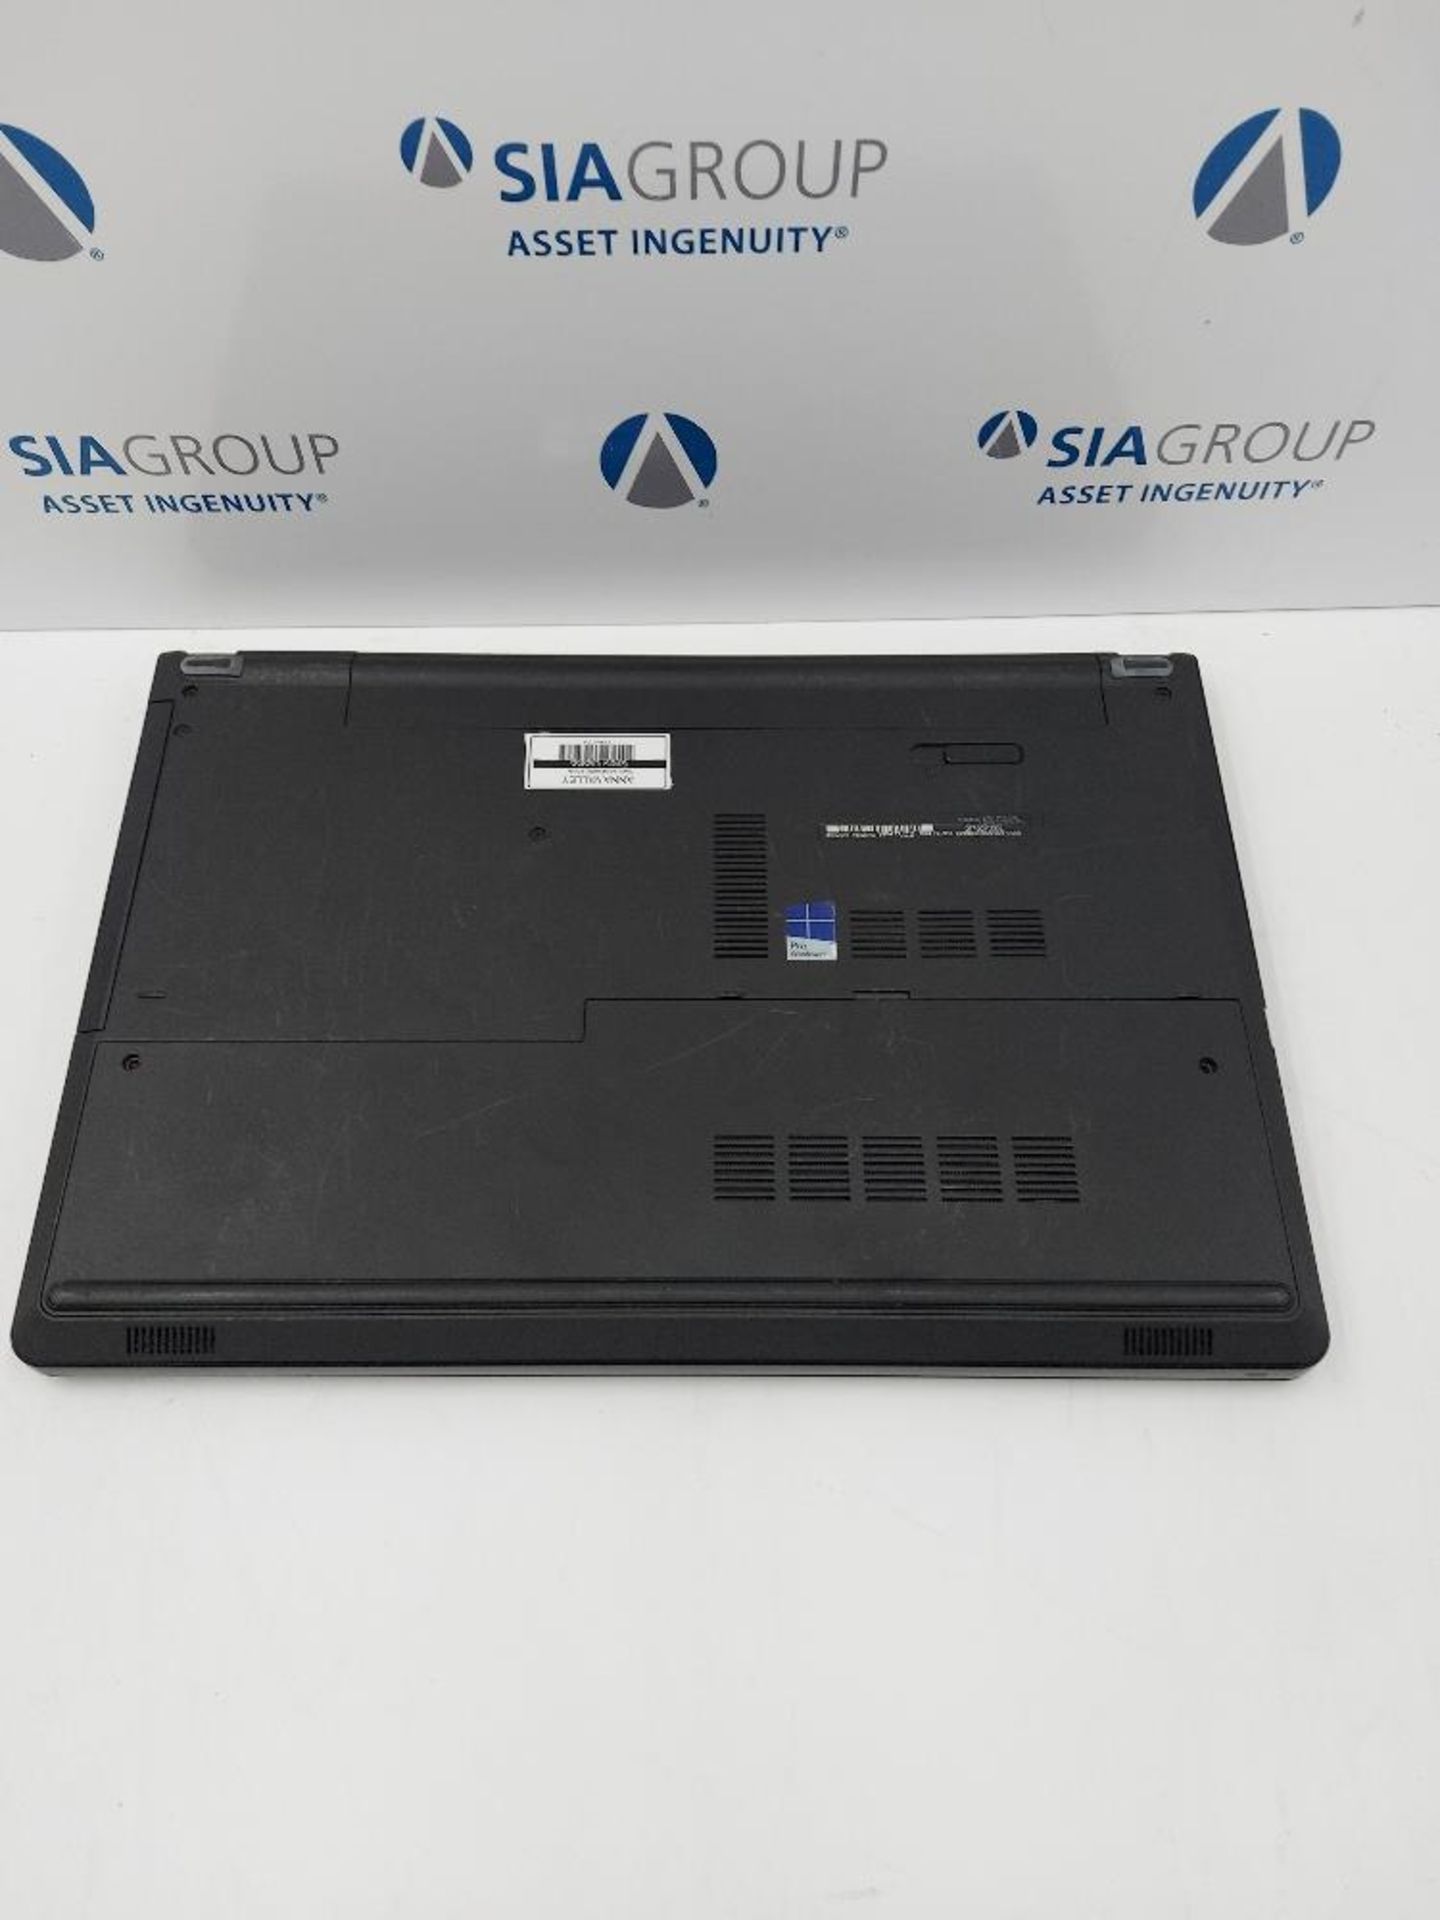 Dell Vostro Windows 7 Laptop with Peli Case - Image 5 of 7